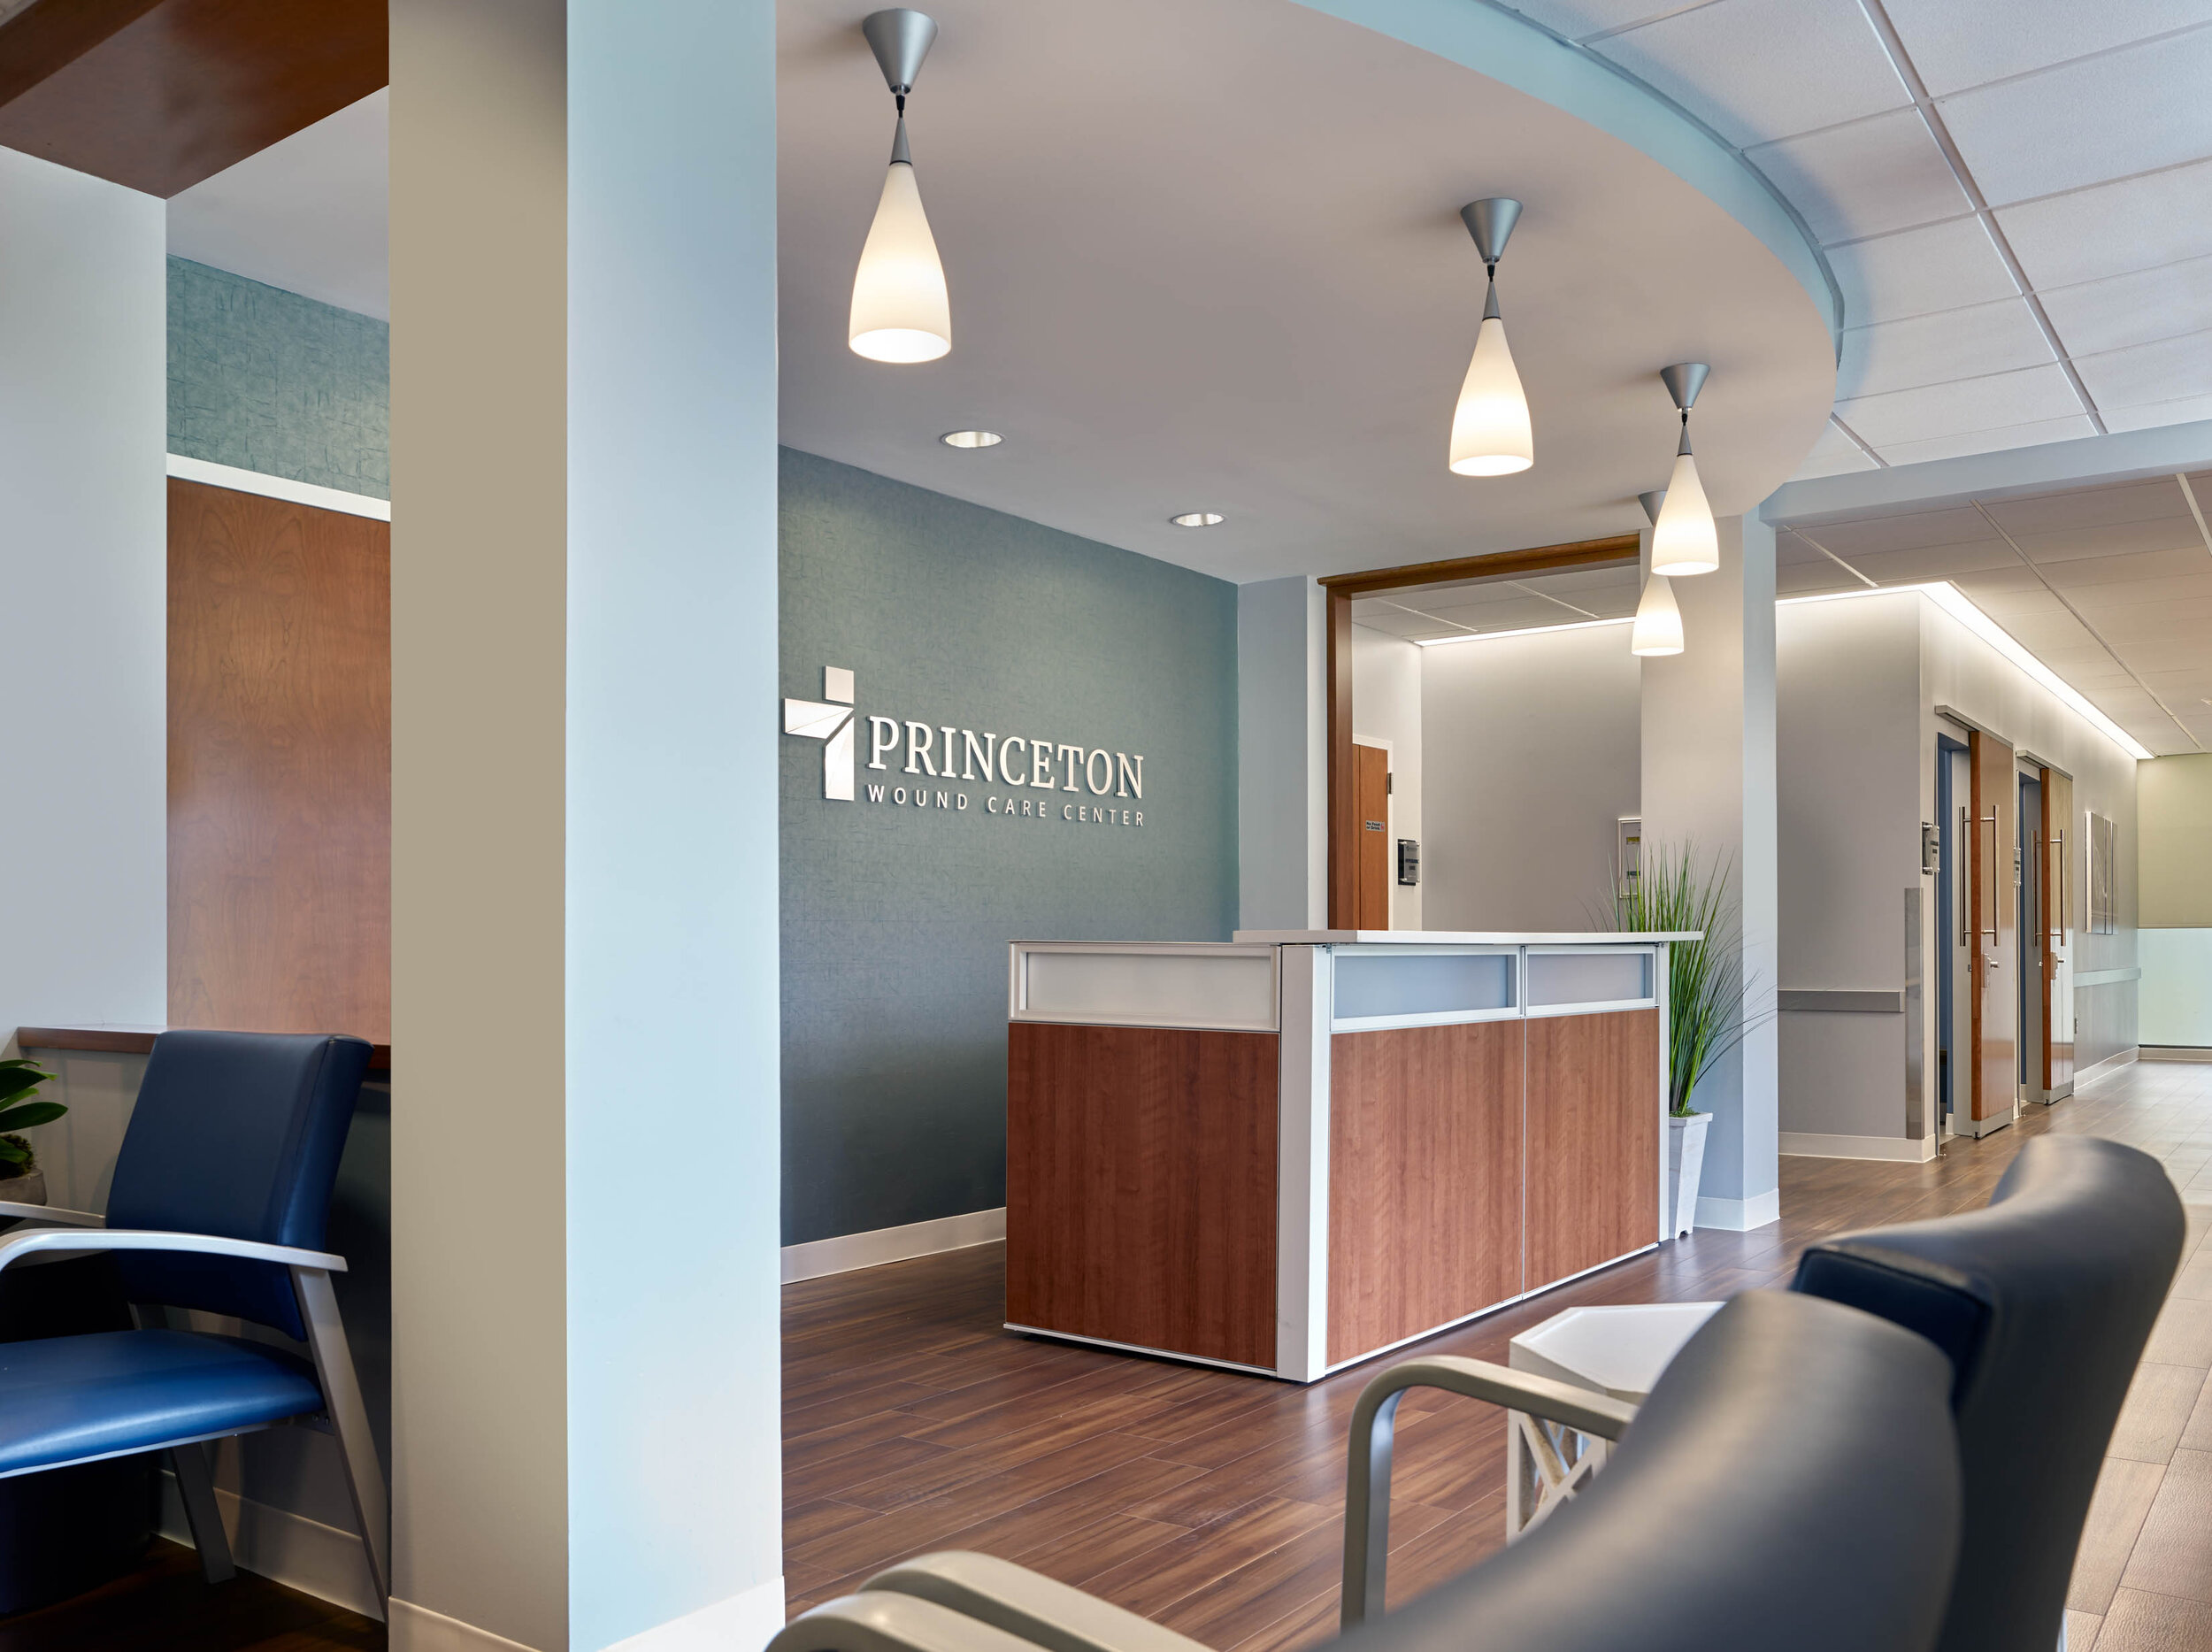 Princeton Wound Care Center Front Desk.